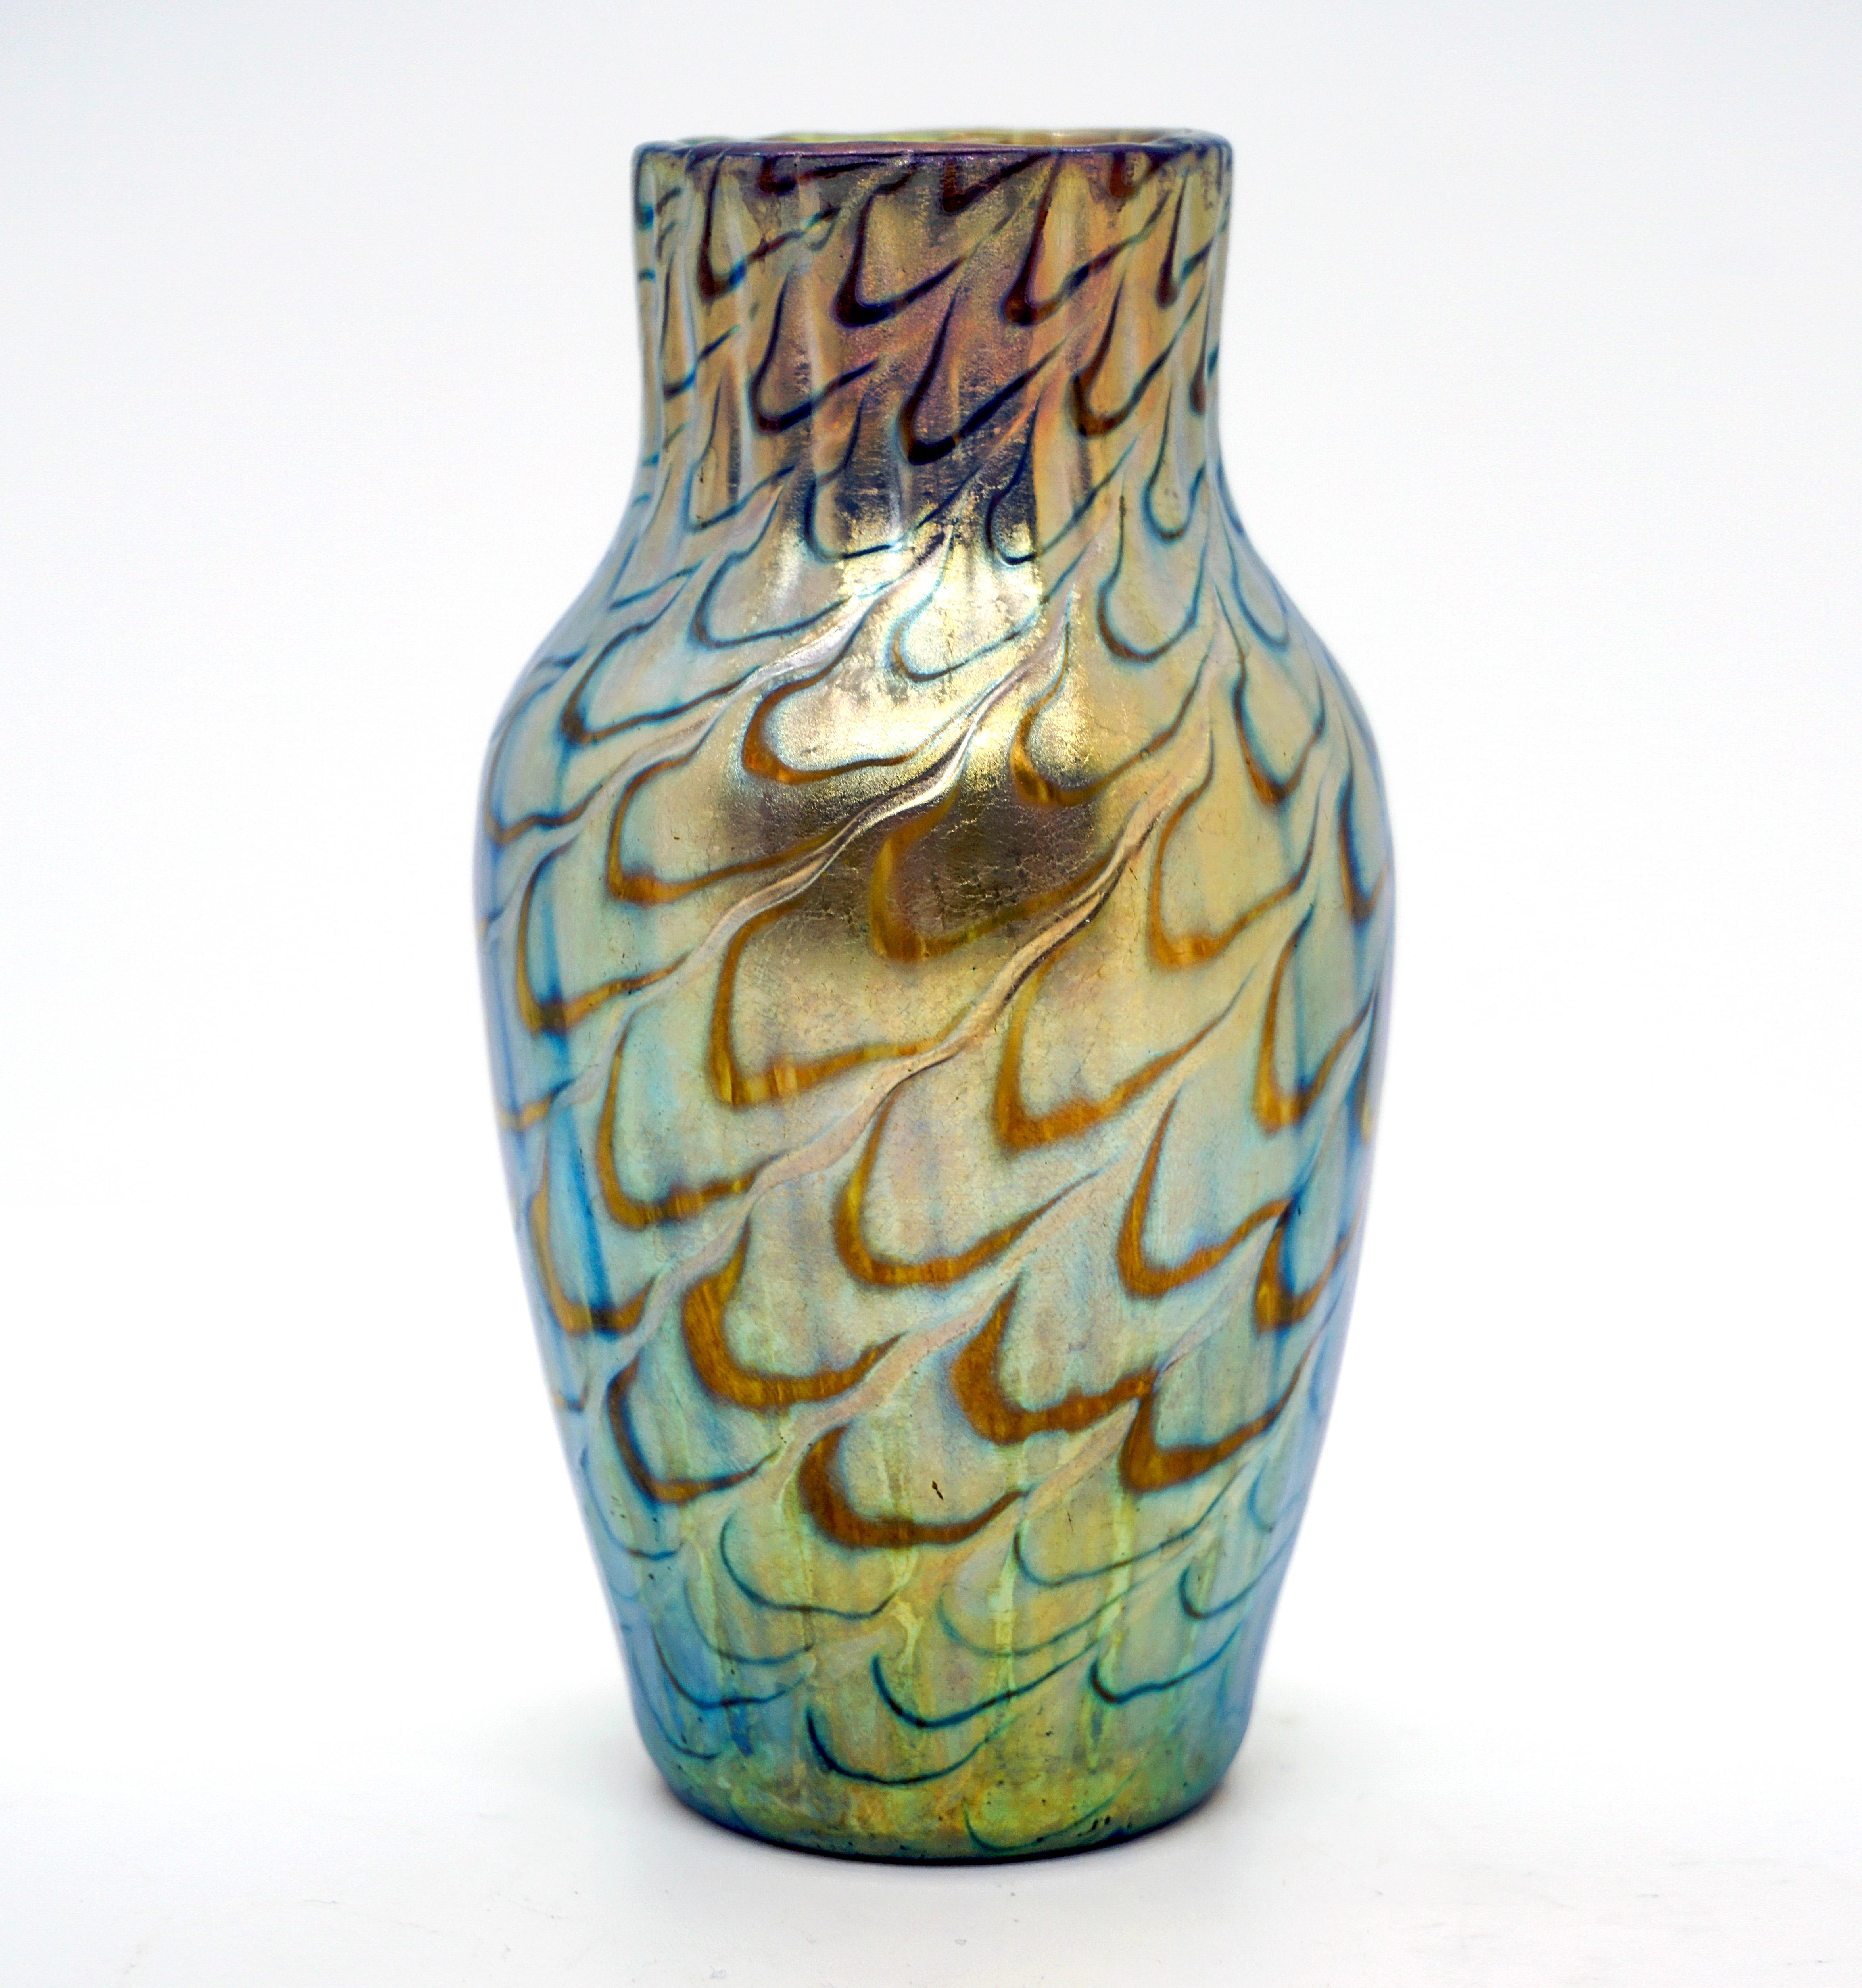 Austrian Loetz Art Nouveau Glass Vase Phenomenon Genre 7734, Austria-Hungary, circa 1898 For Sale